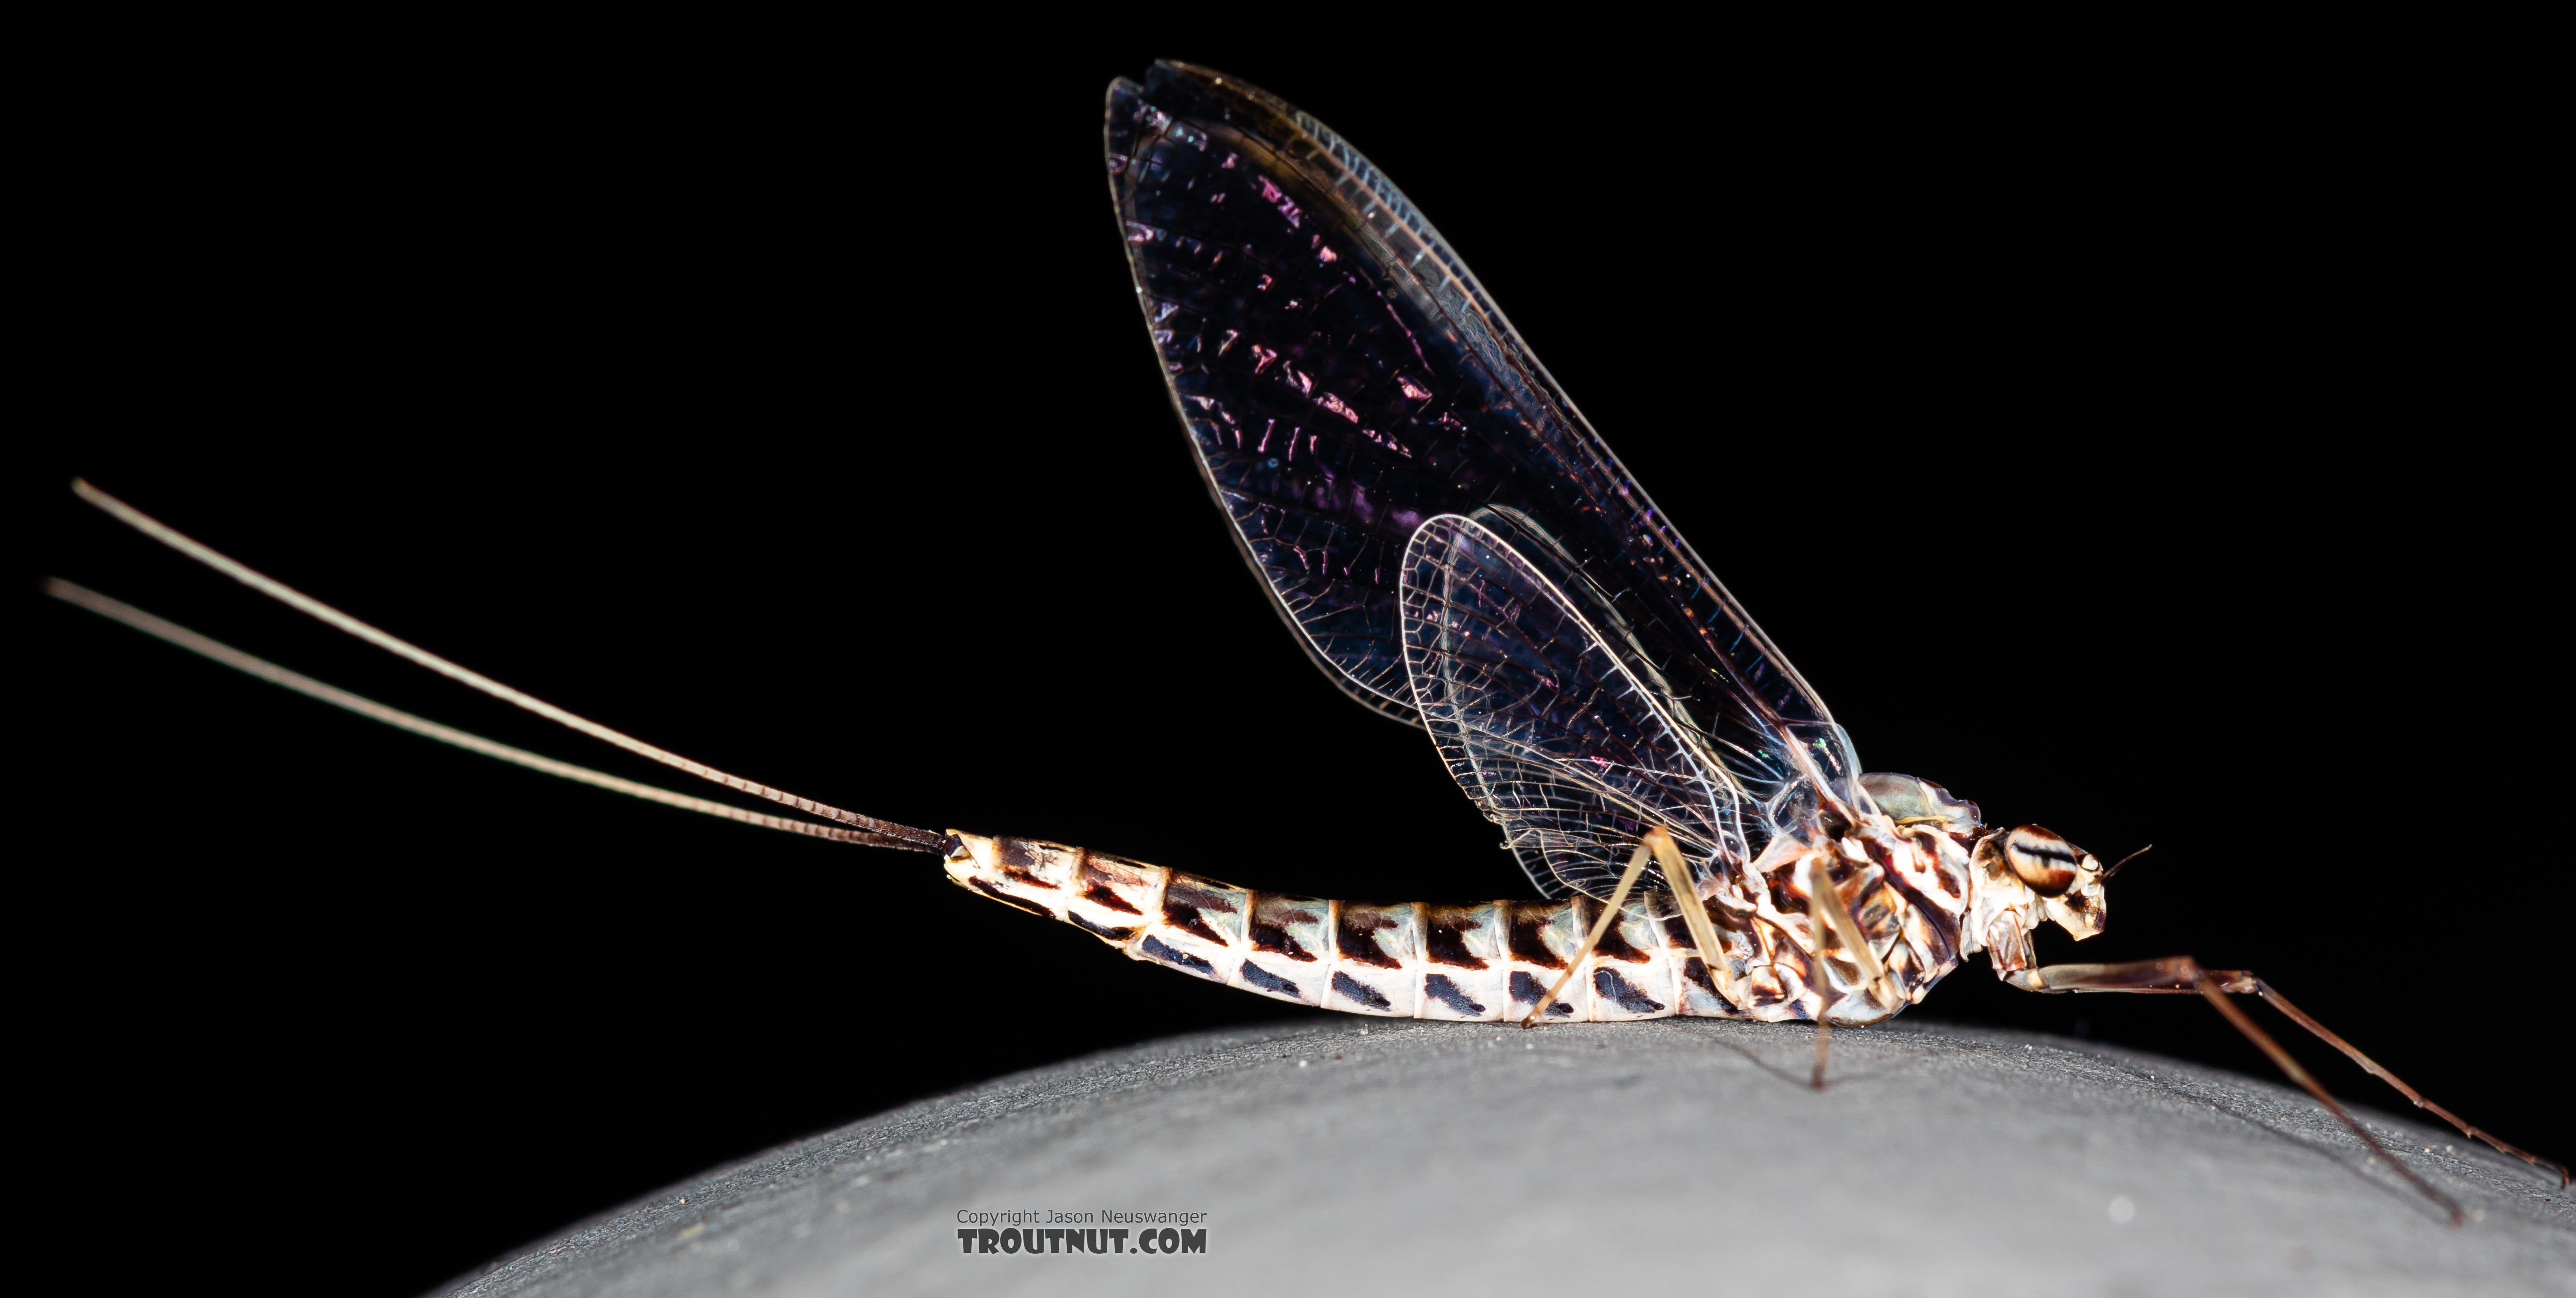 Female Siphlonurus alternatus (Gray Drake) Mayfly Spinner from the Gallatin River in Montana